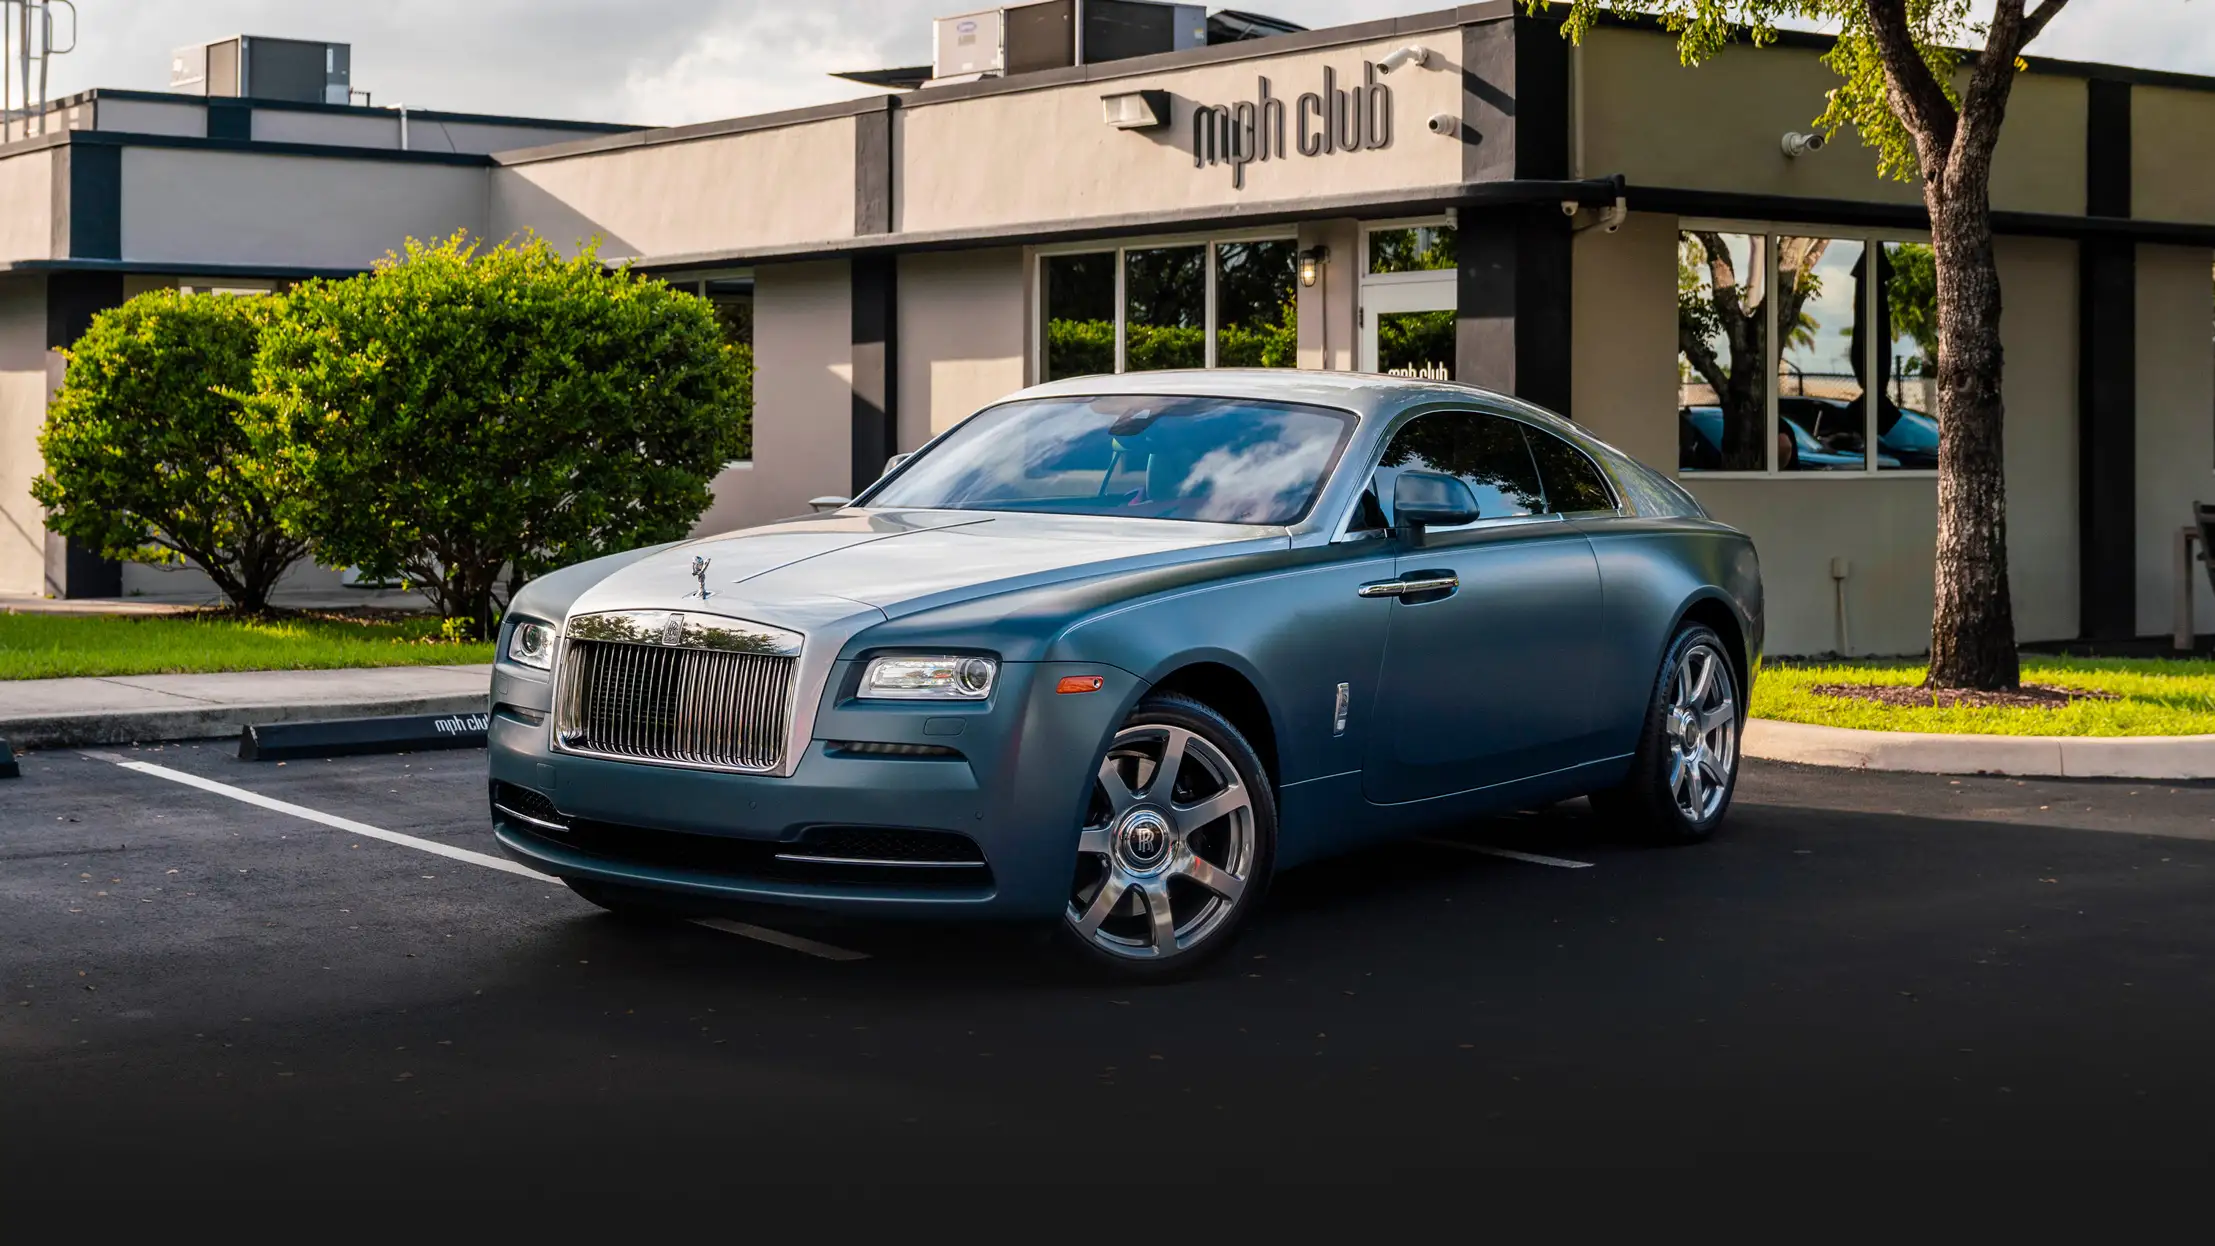 Matte blue Rolls Royce Wraith rental profile view mph club